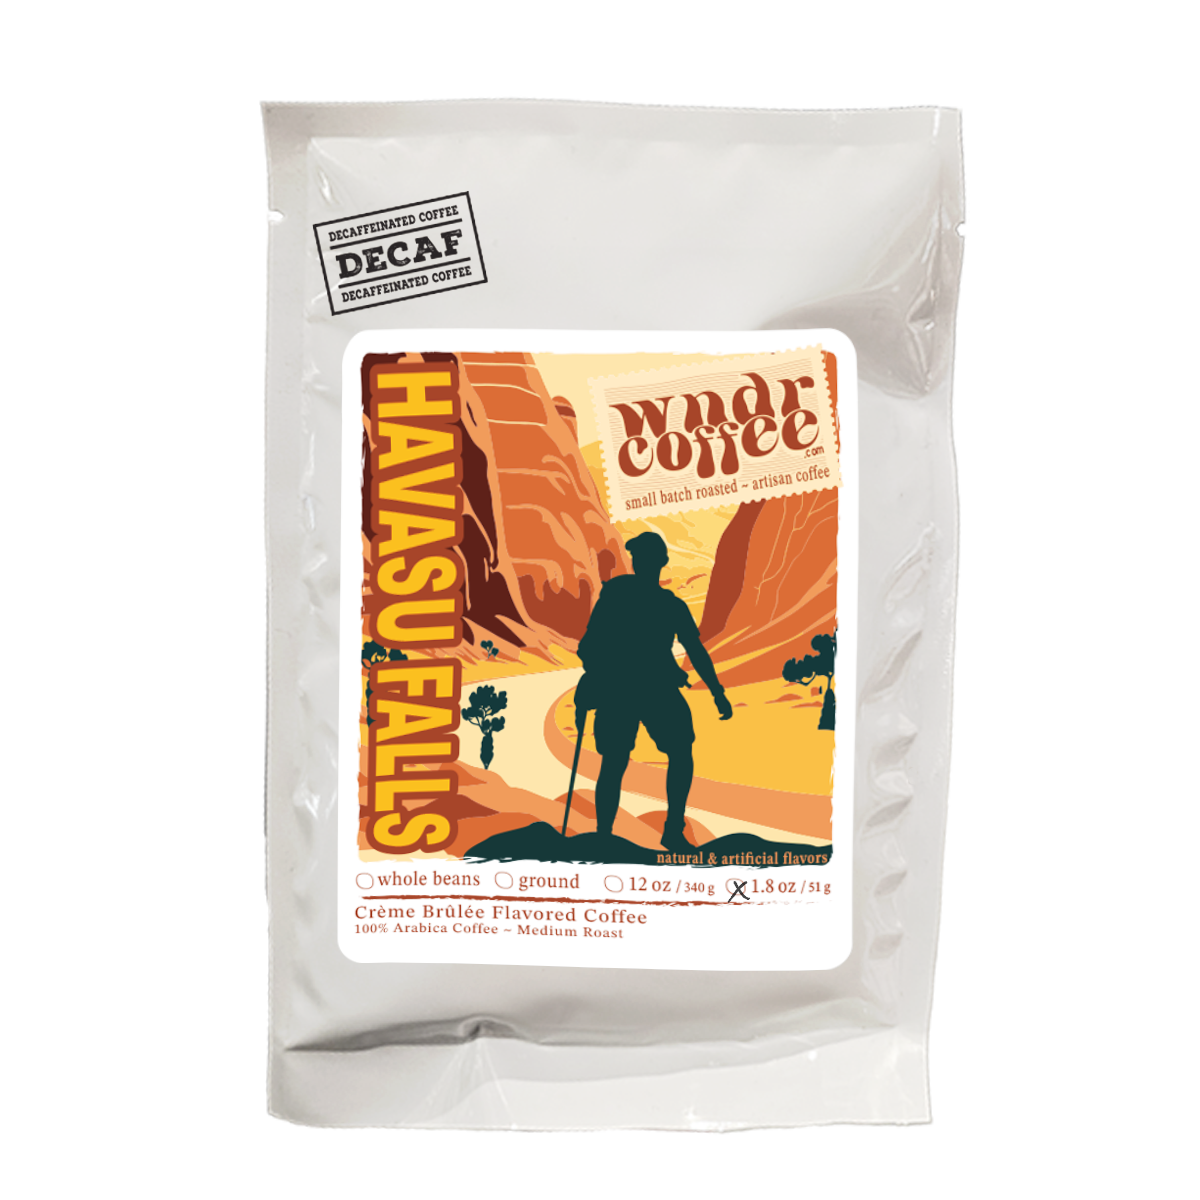 DECAF-1.8oz-bag-Havas-falls-Flavored-Coffee